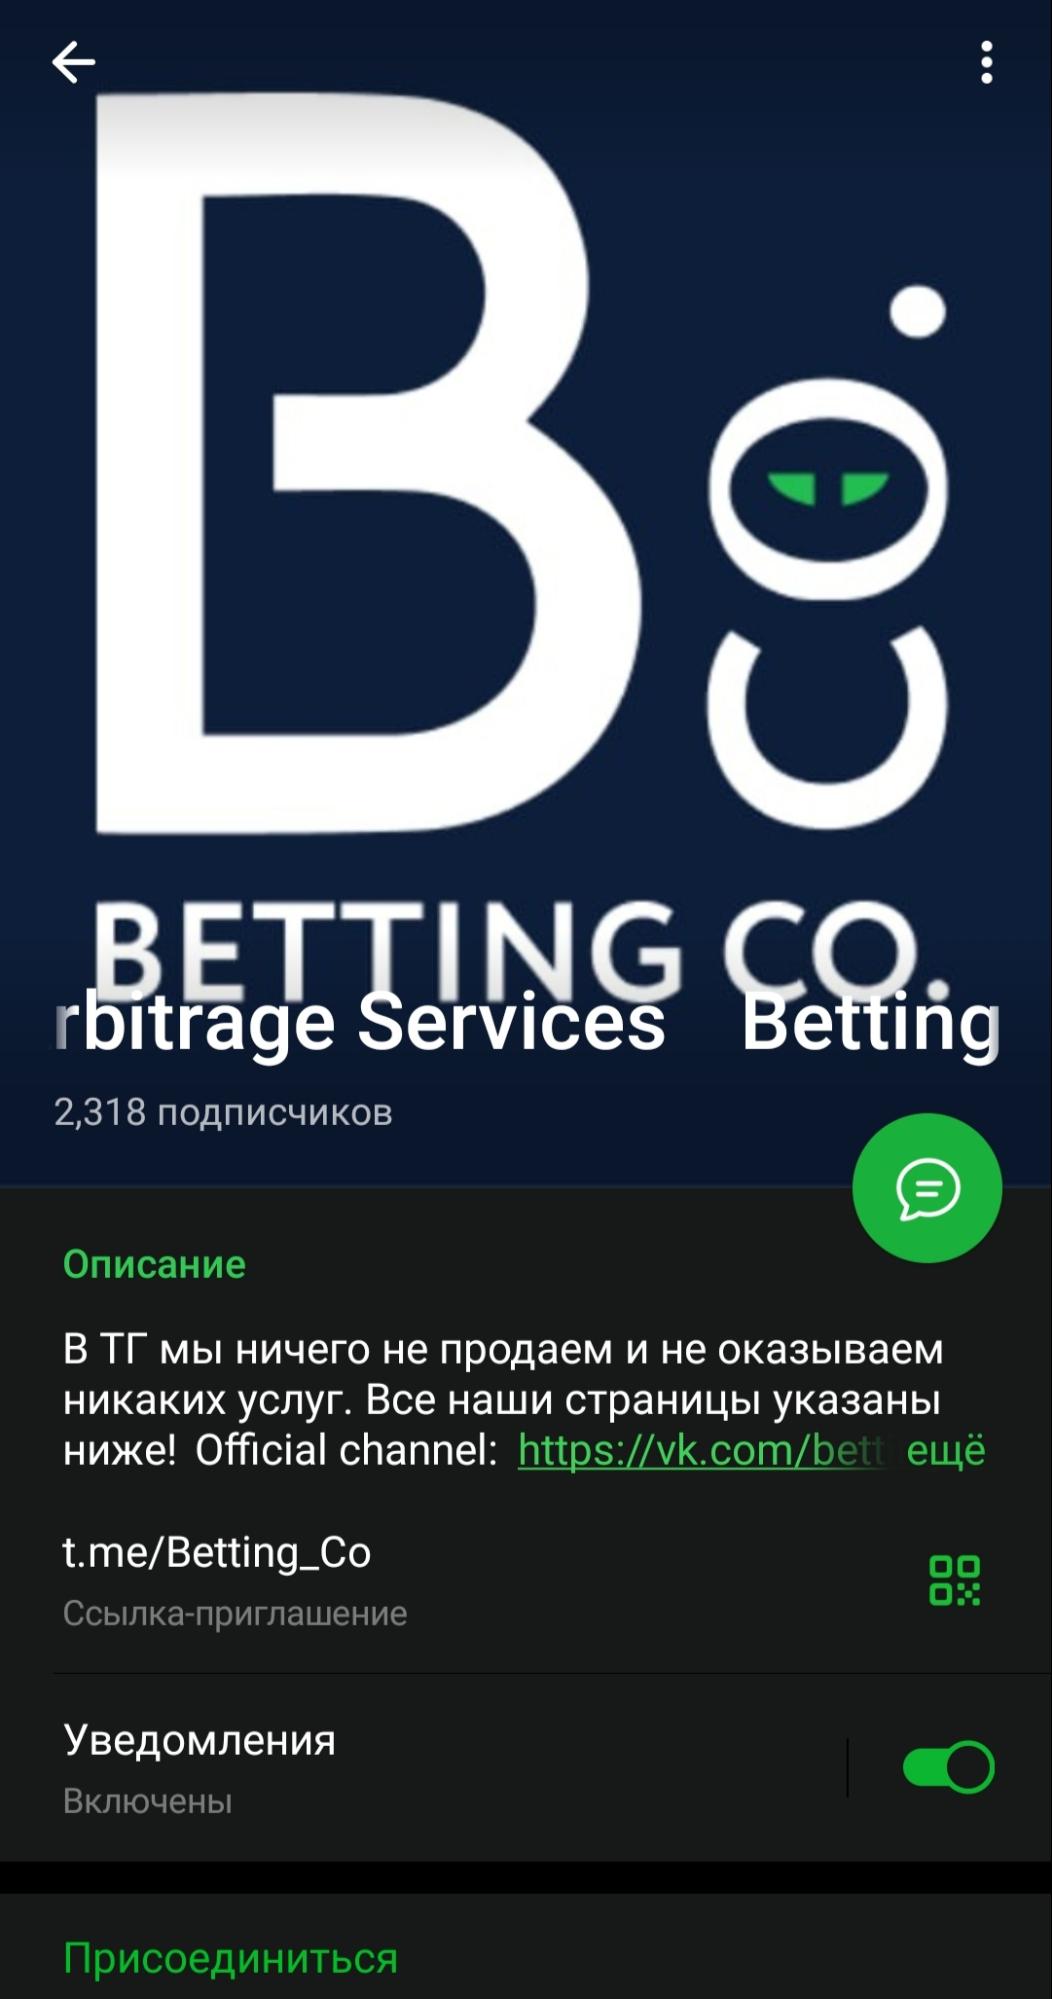 Телеграмм Betting co